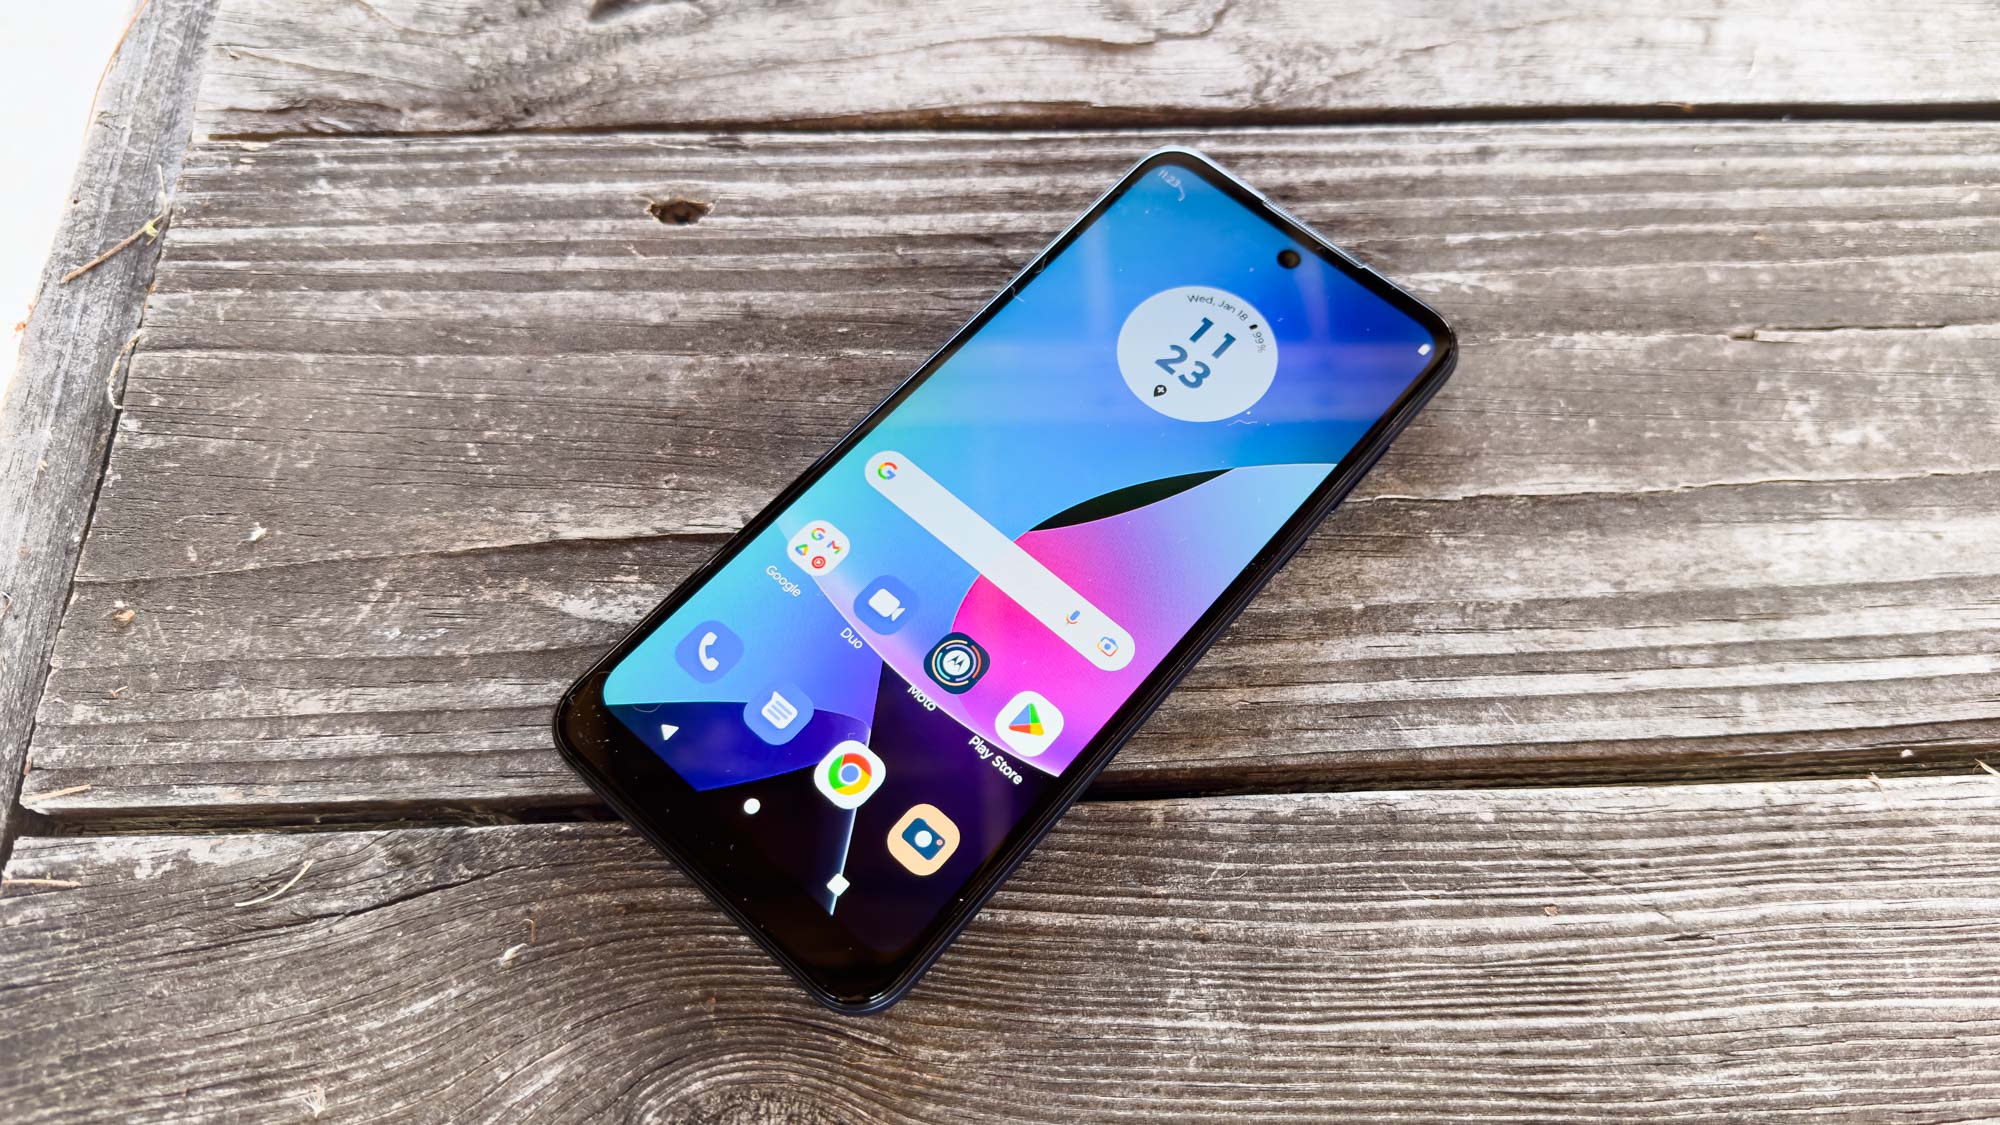 Motorola Moto G Play (2021) Review